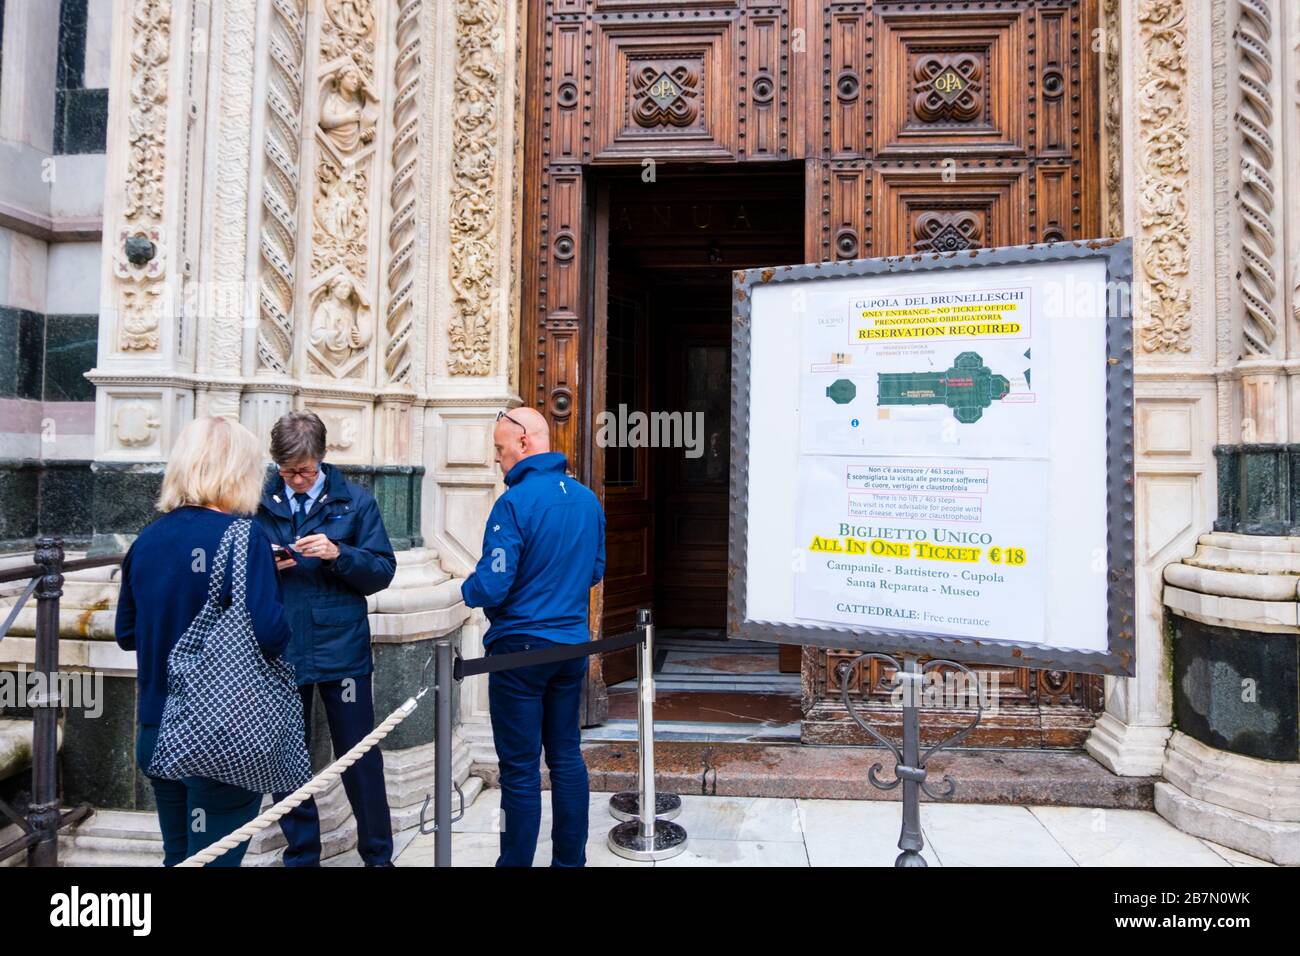 Eintritt zum Dom, Cattedrale di Santa Maria del Fiore, Dom von Florenz, Piazza del Duomo, Florenz, Italien Stockfoto